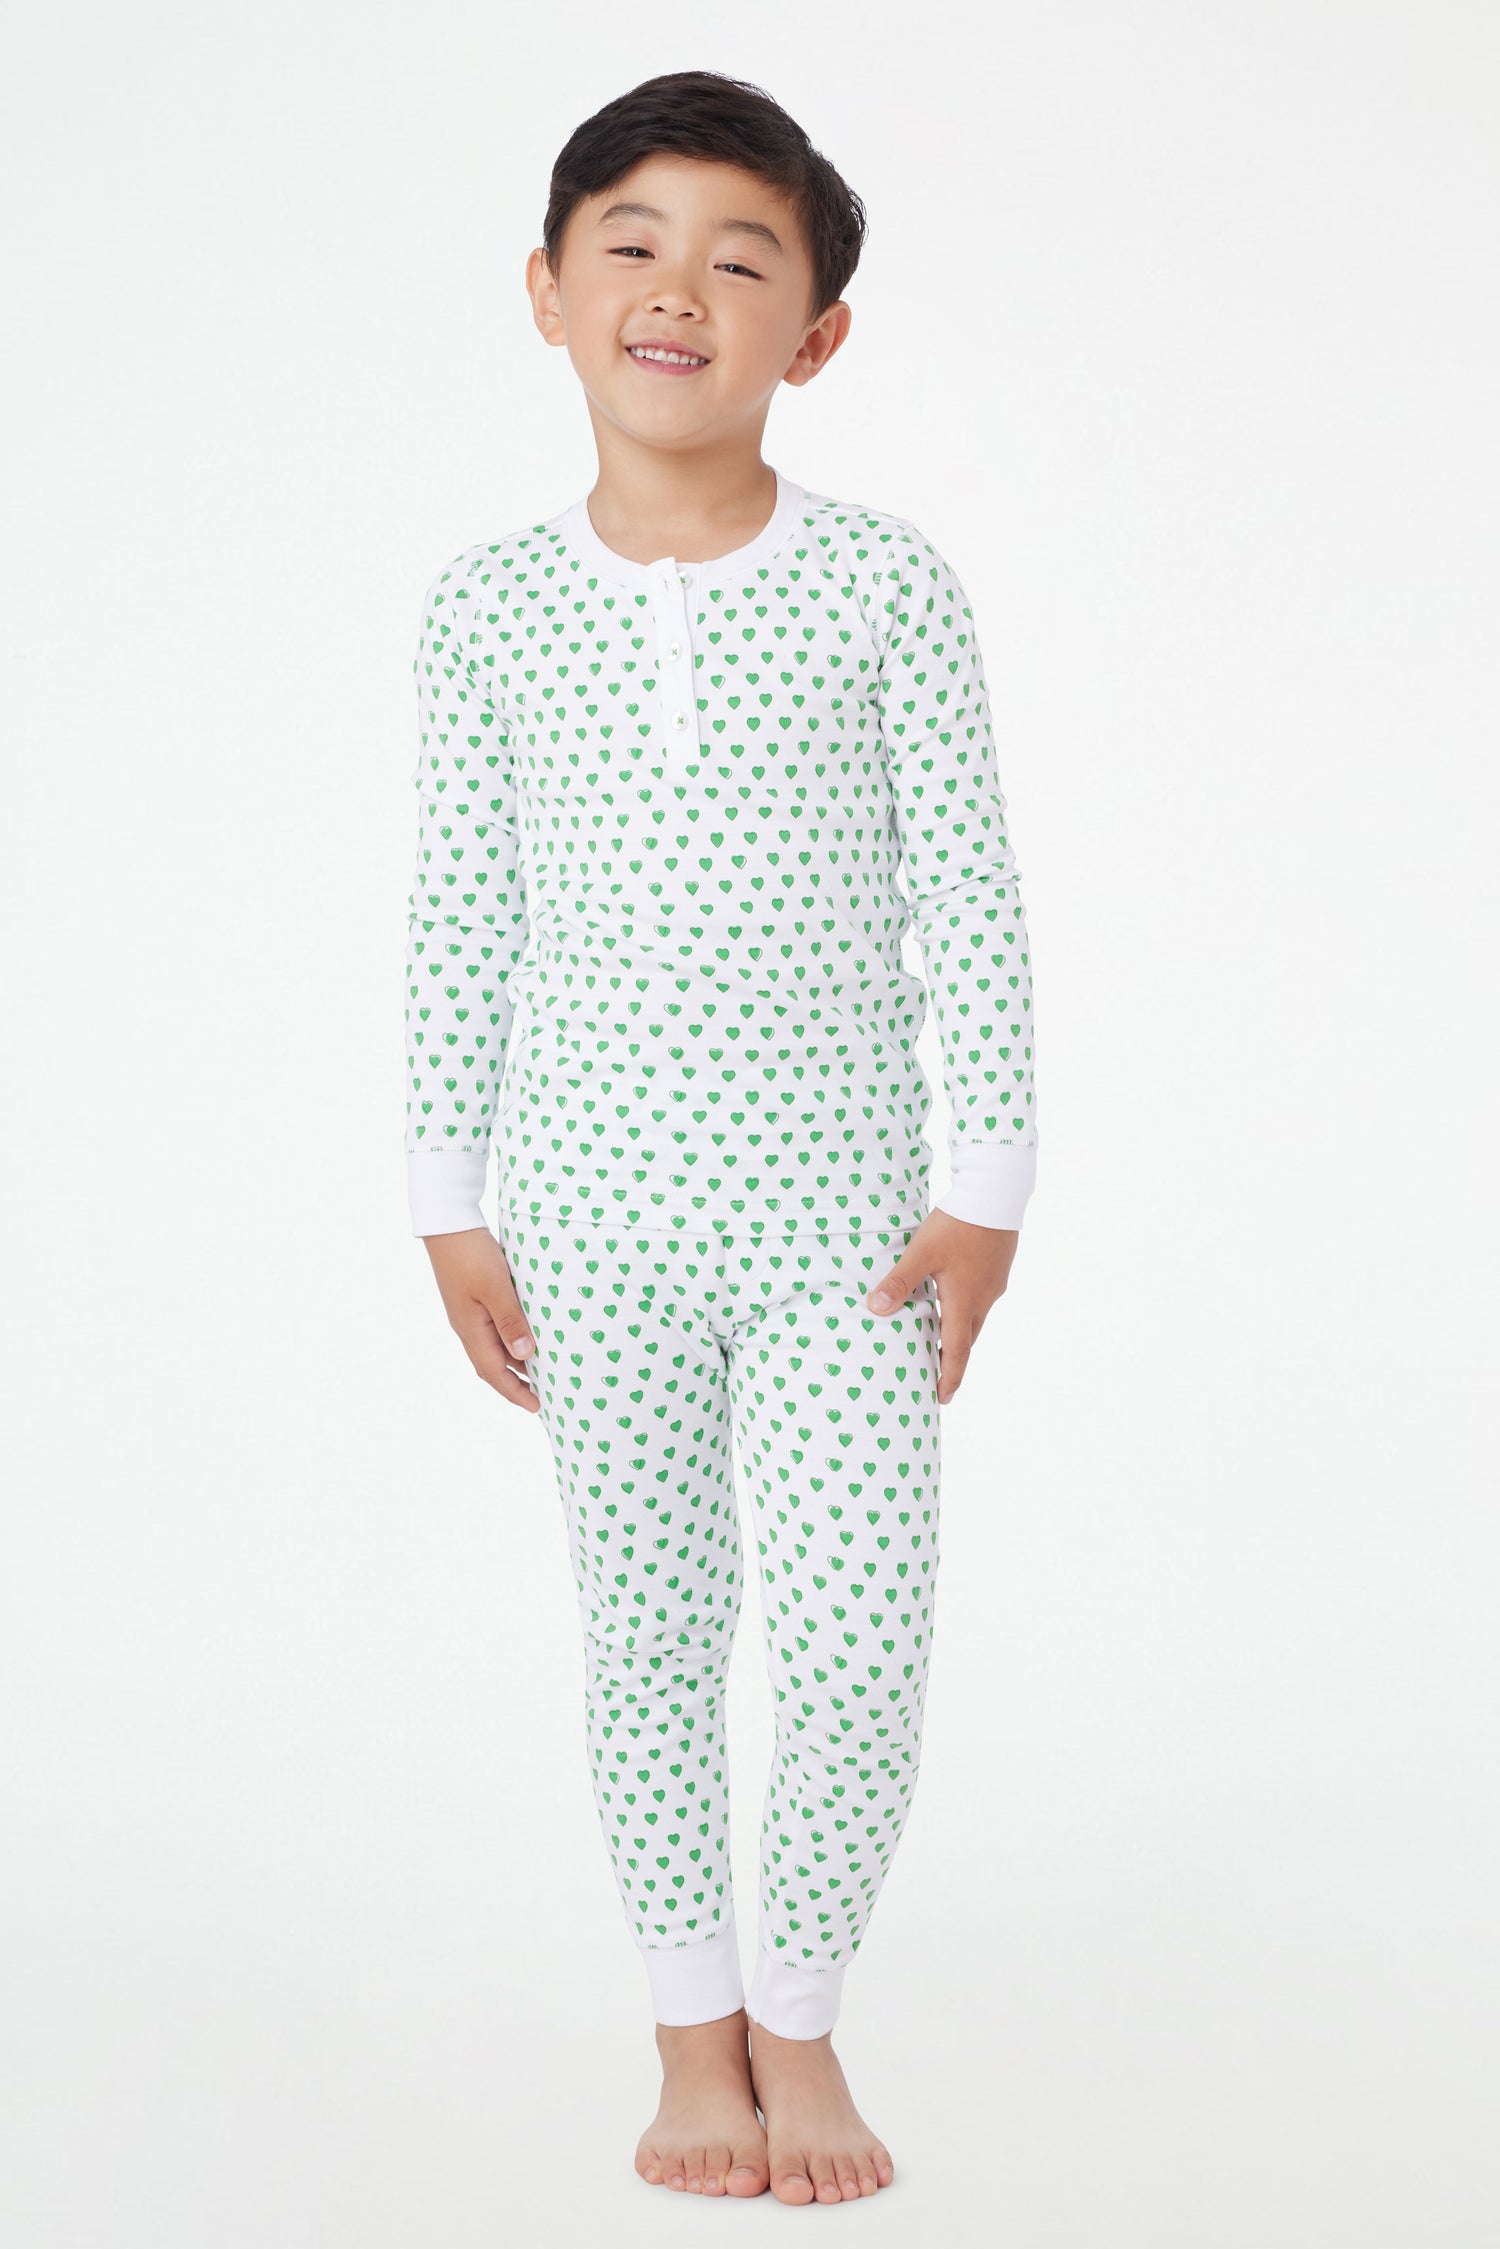 Roller Rabbit Kids Emerald Hearts Pajamas